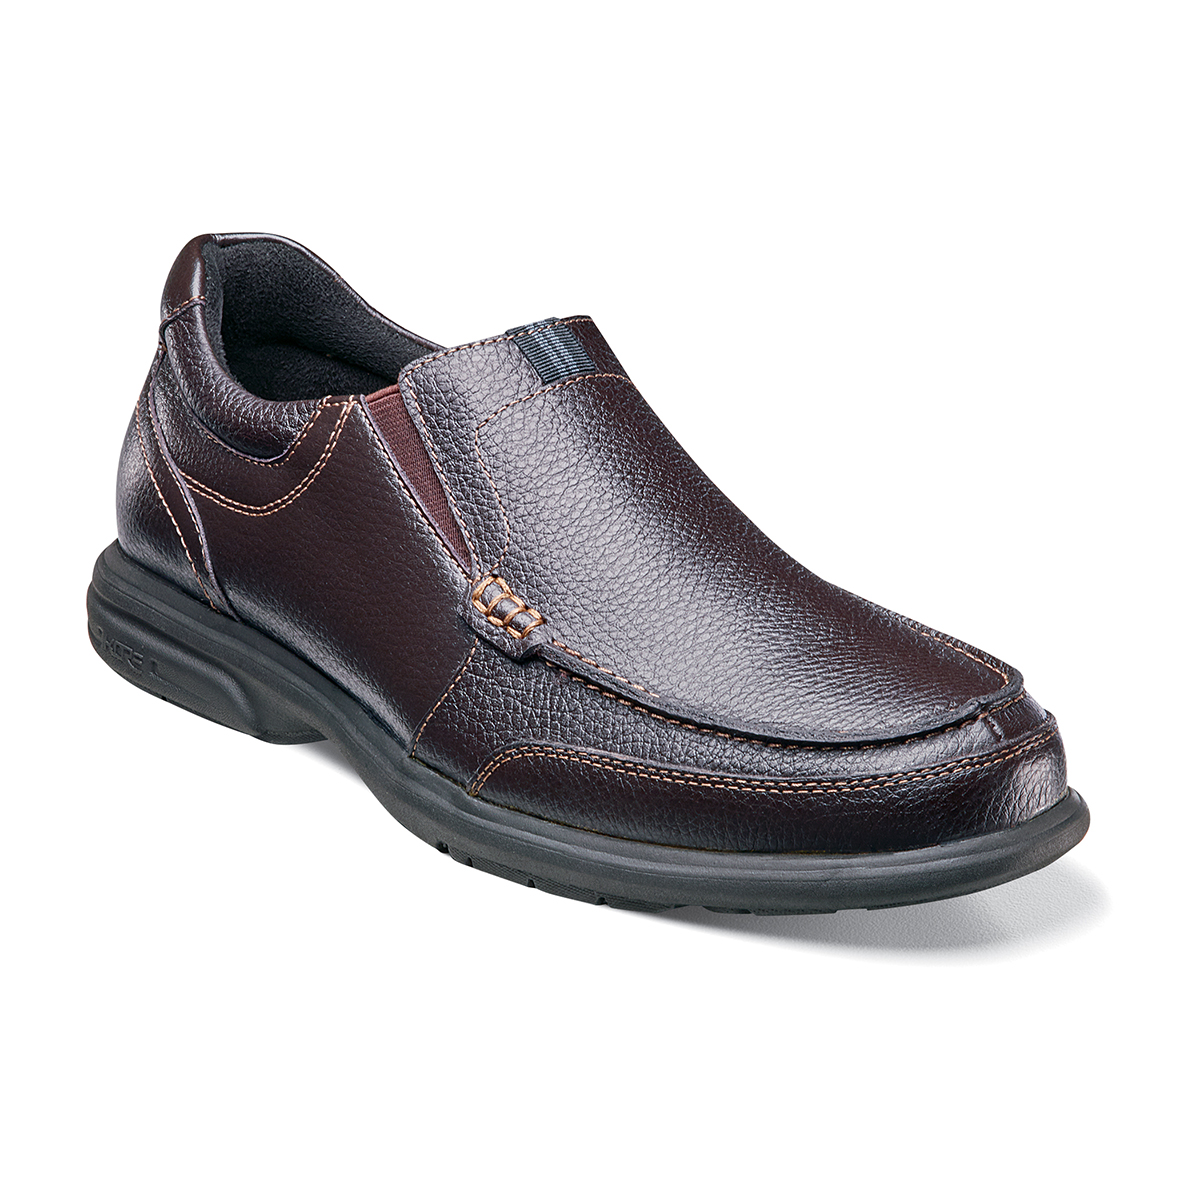 Men's Comfort Gel Shoes | Dark Brown Moc Toe Slip On | Nunn Bush Carter